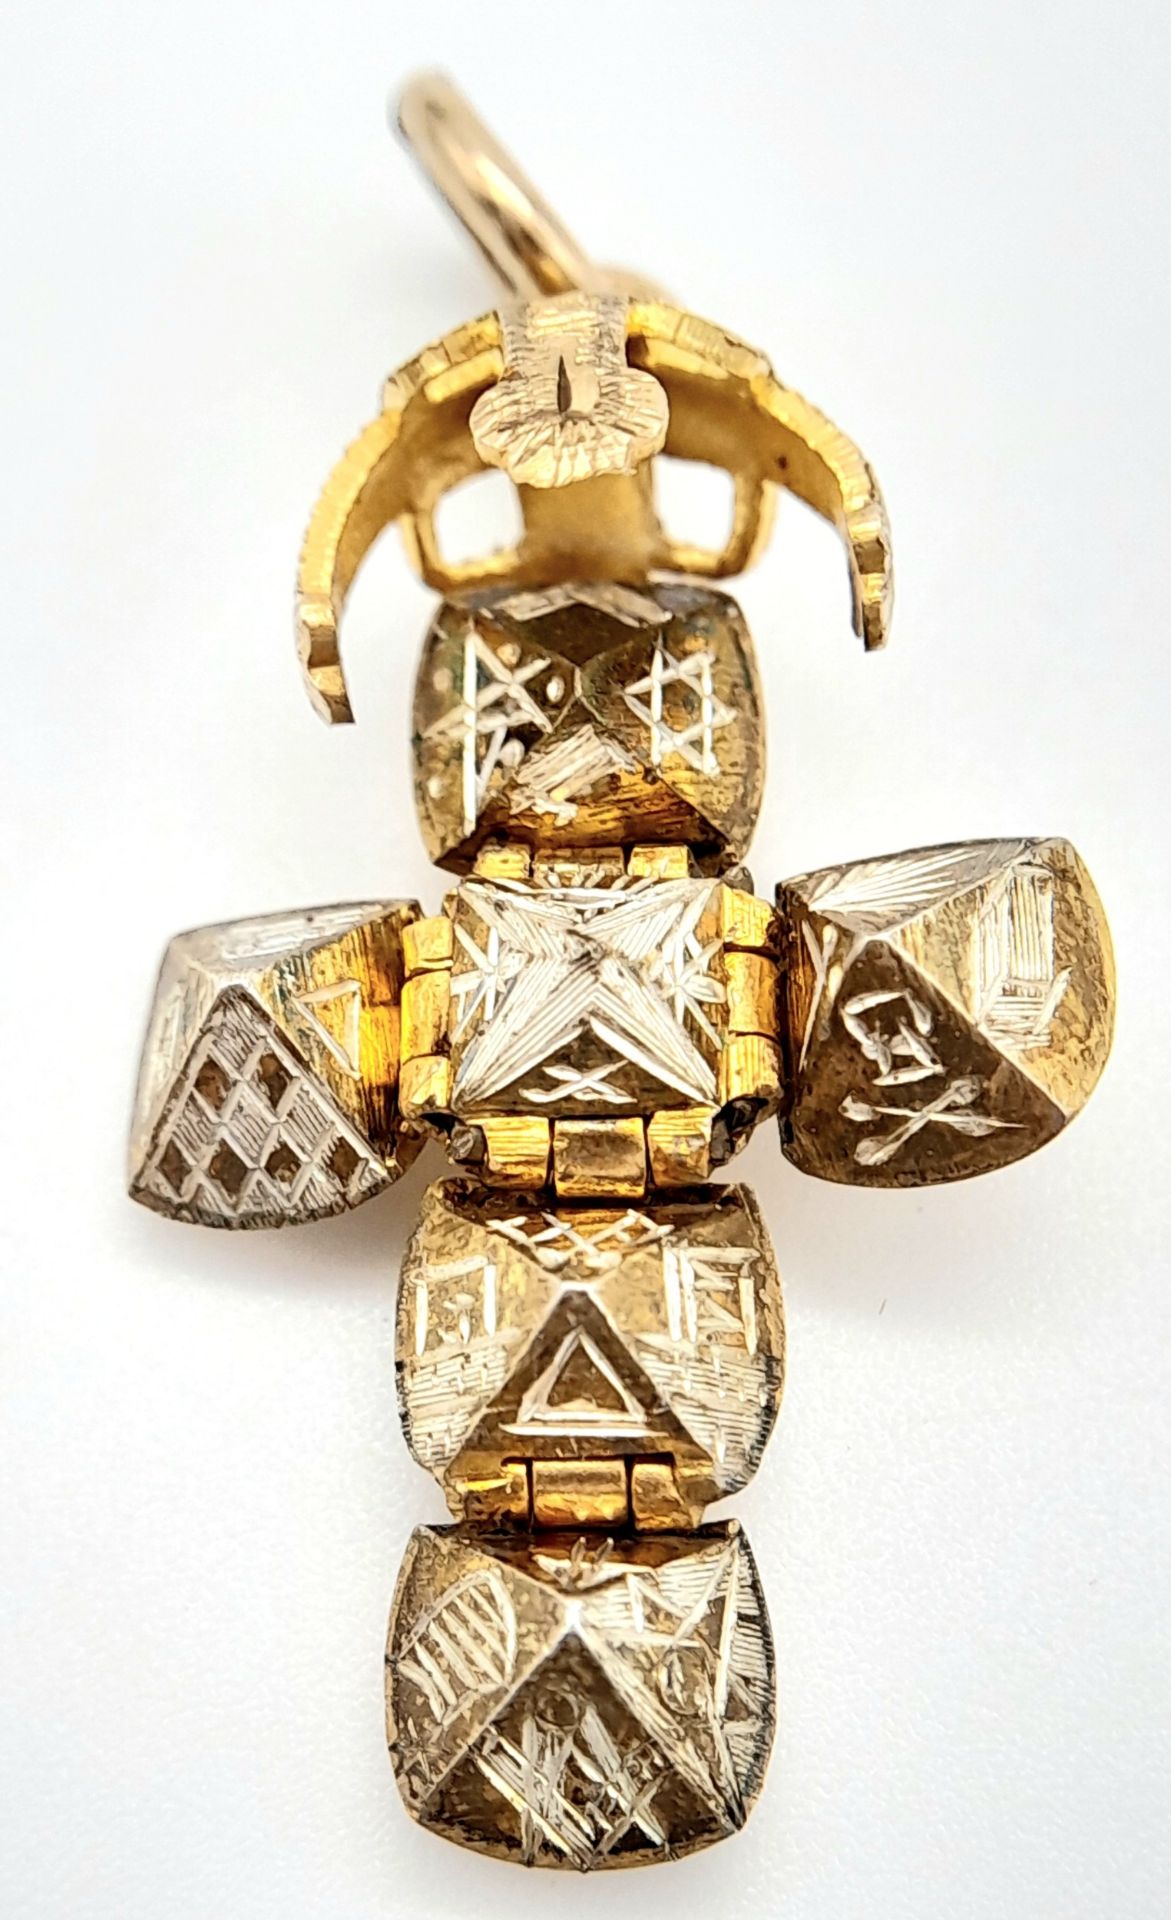 A Vintage 9K Gold Masonic Opening Orb Pendant - Silver Interior, Opens to reveal masonic symbols.